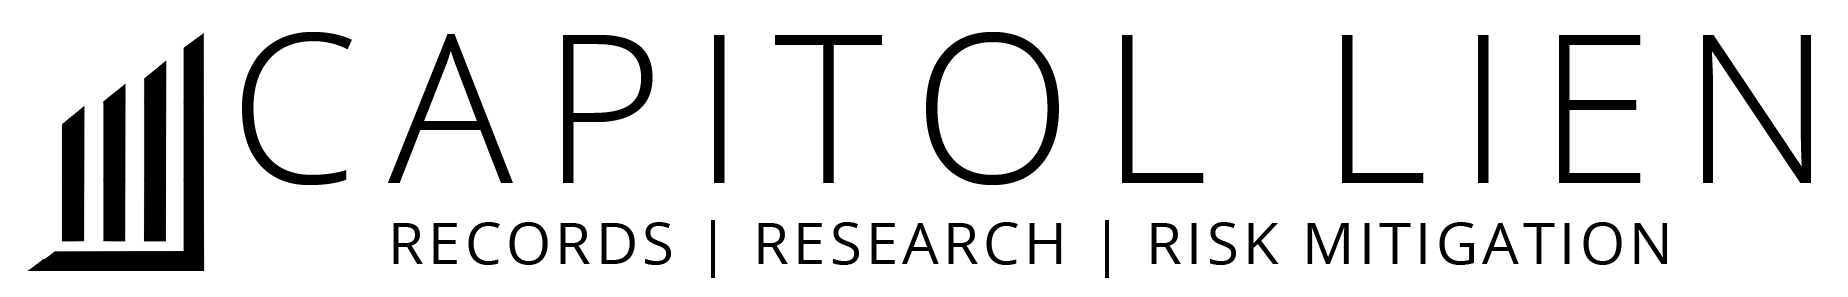 Capitol Lien Records & Research logo